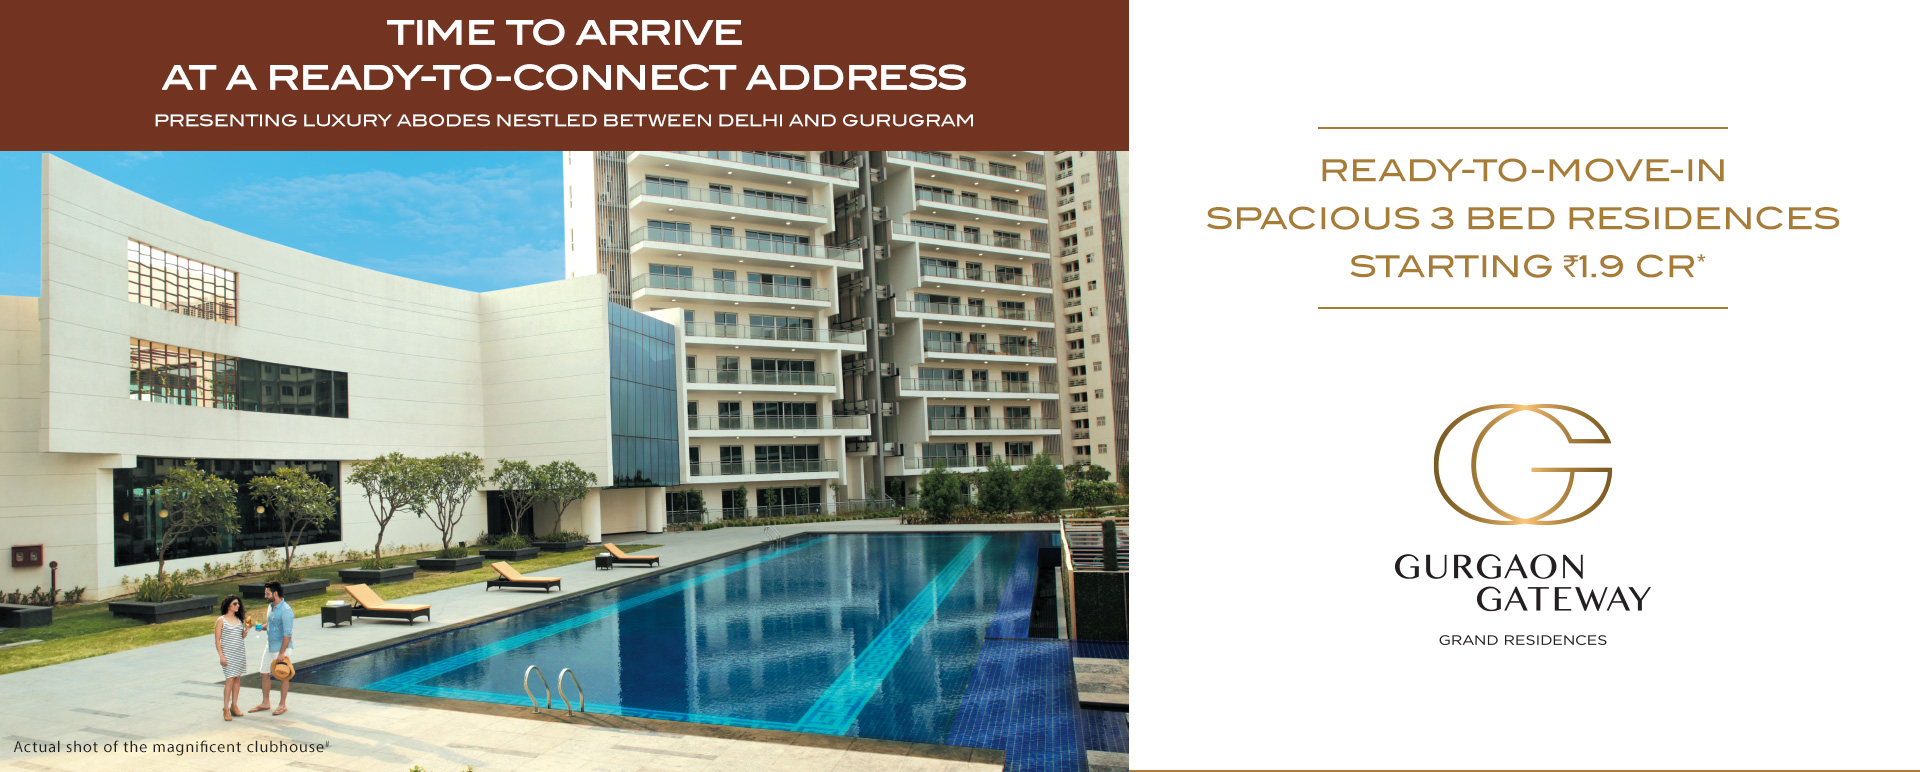 Spacious 3-bed residences starting Rs 1.9 Cr at  Tata Gurgaon Gateway in Gurgaon Update